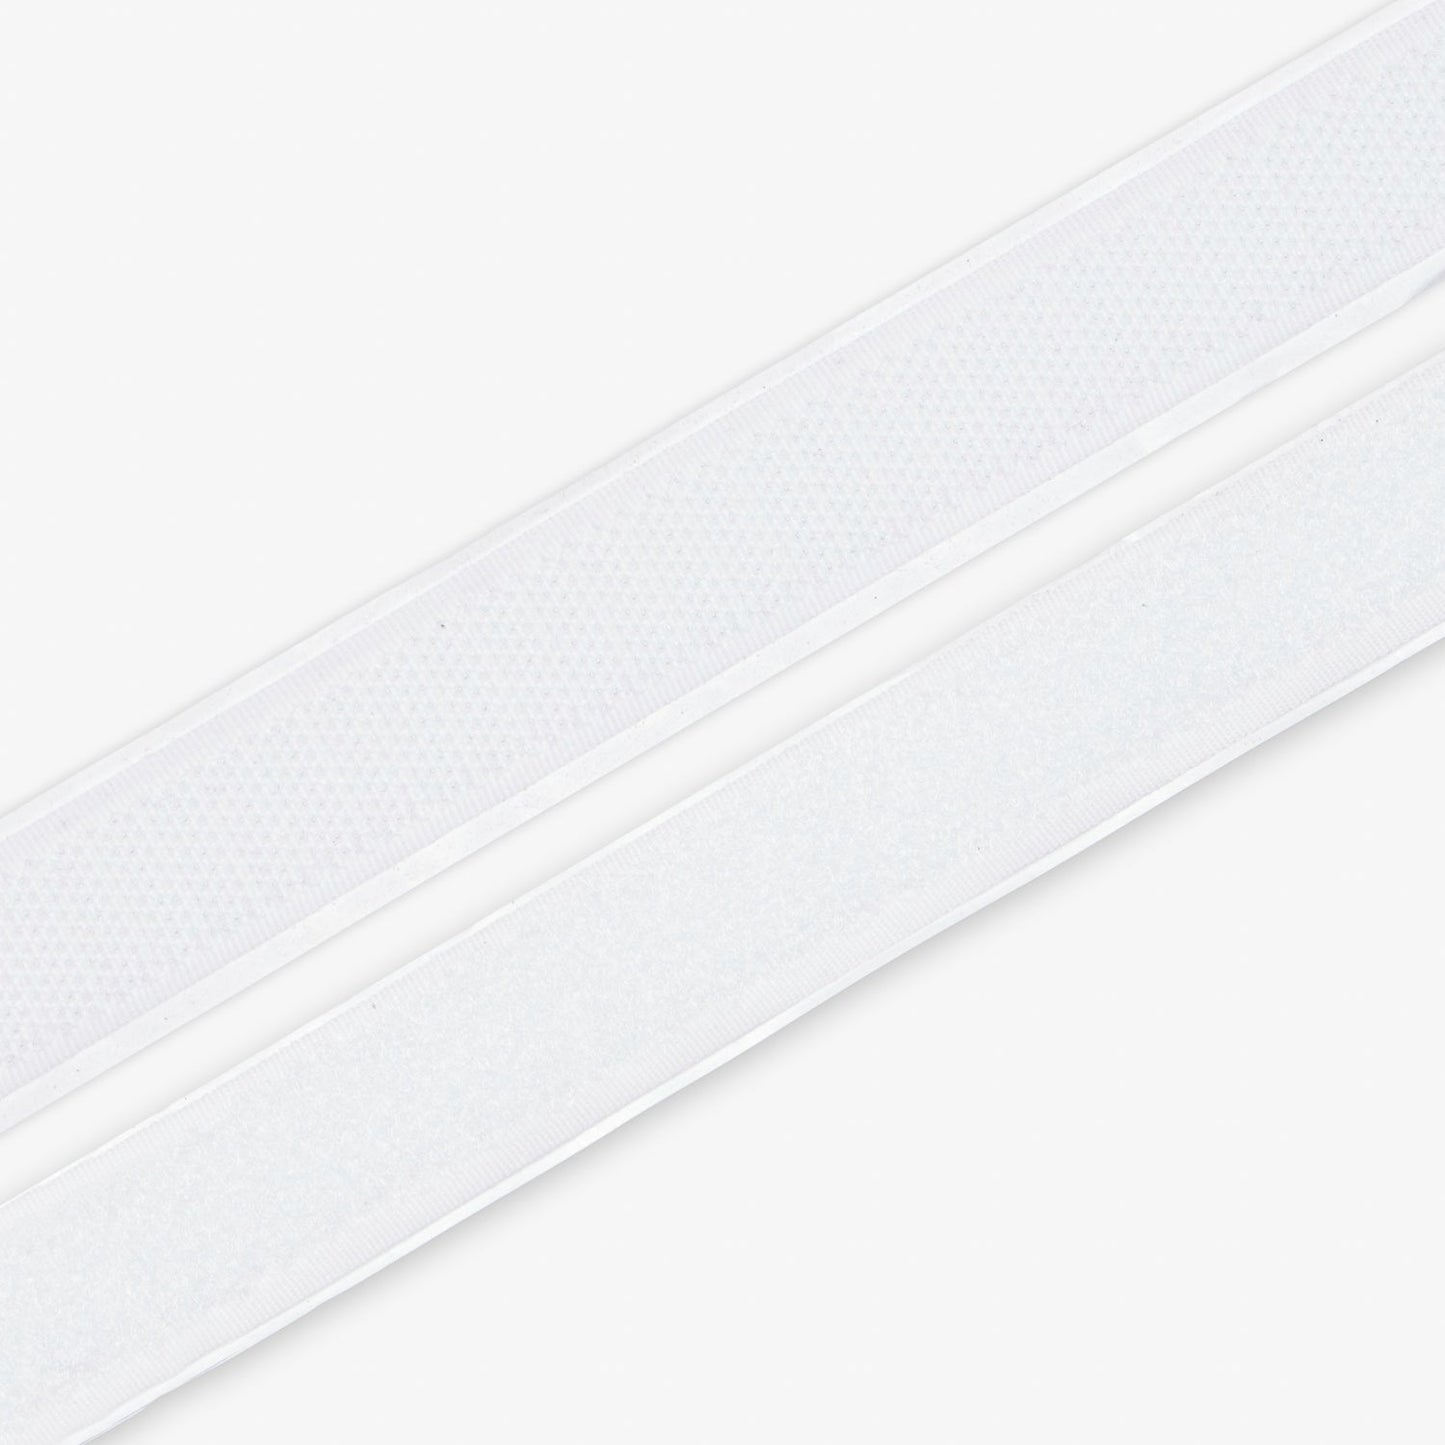 Self Adhesive Velcro 25mm White